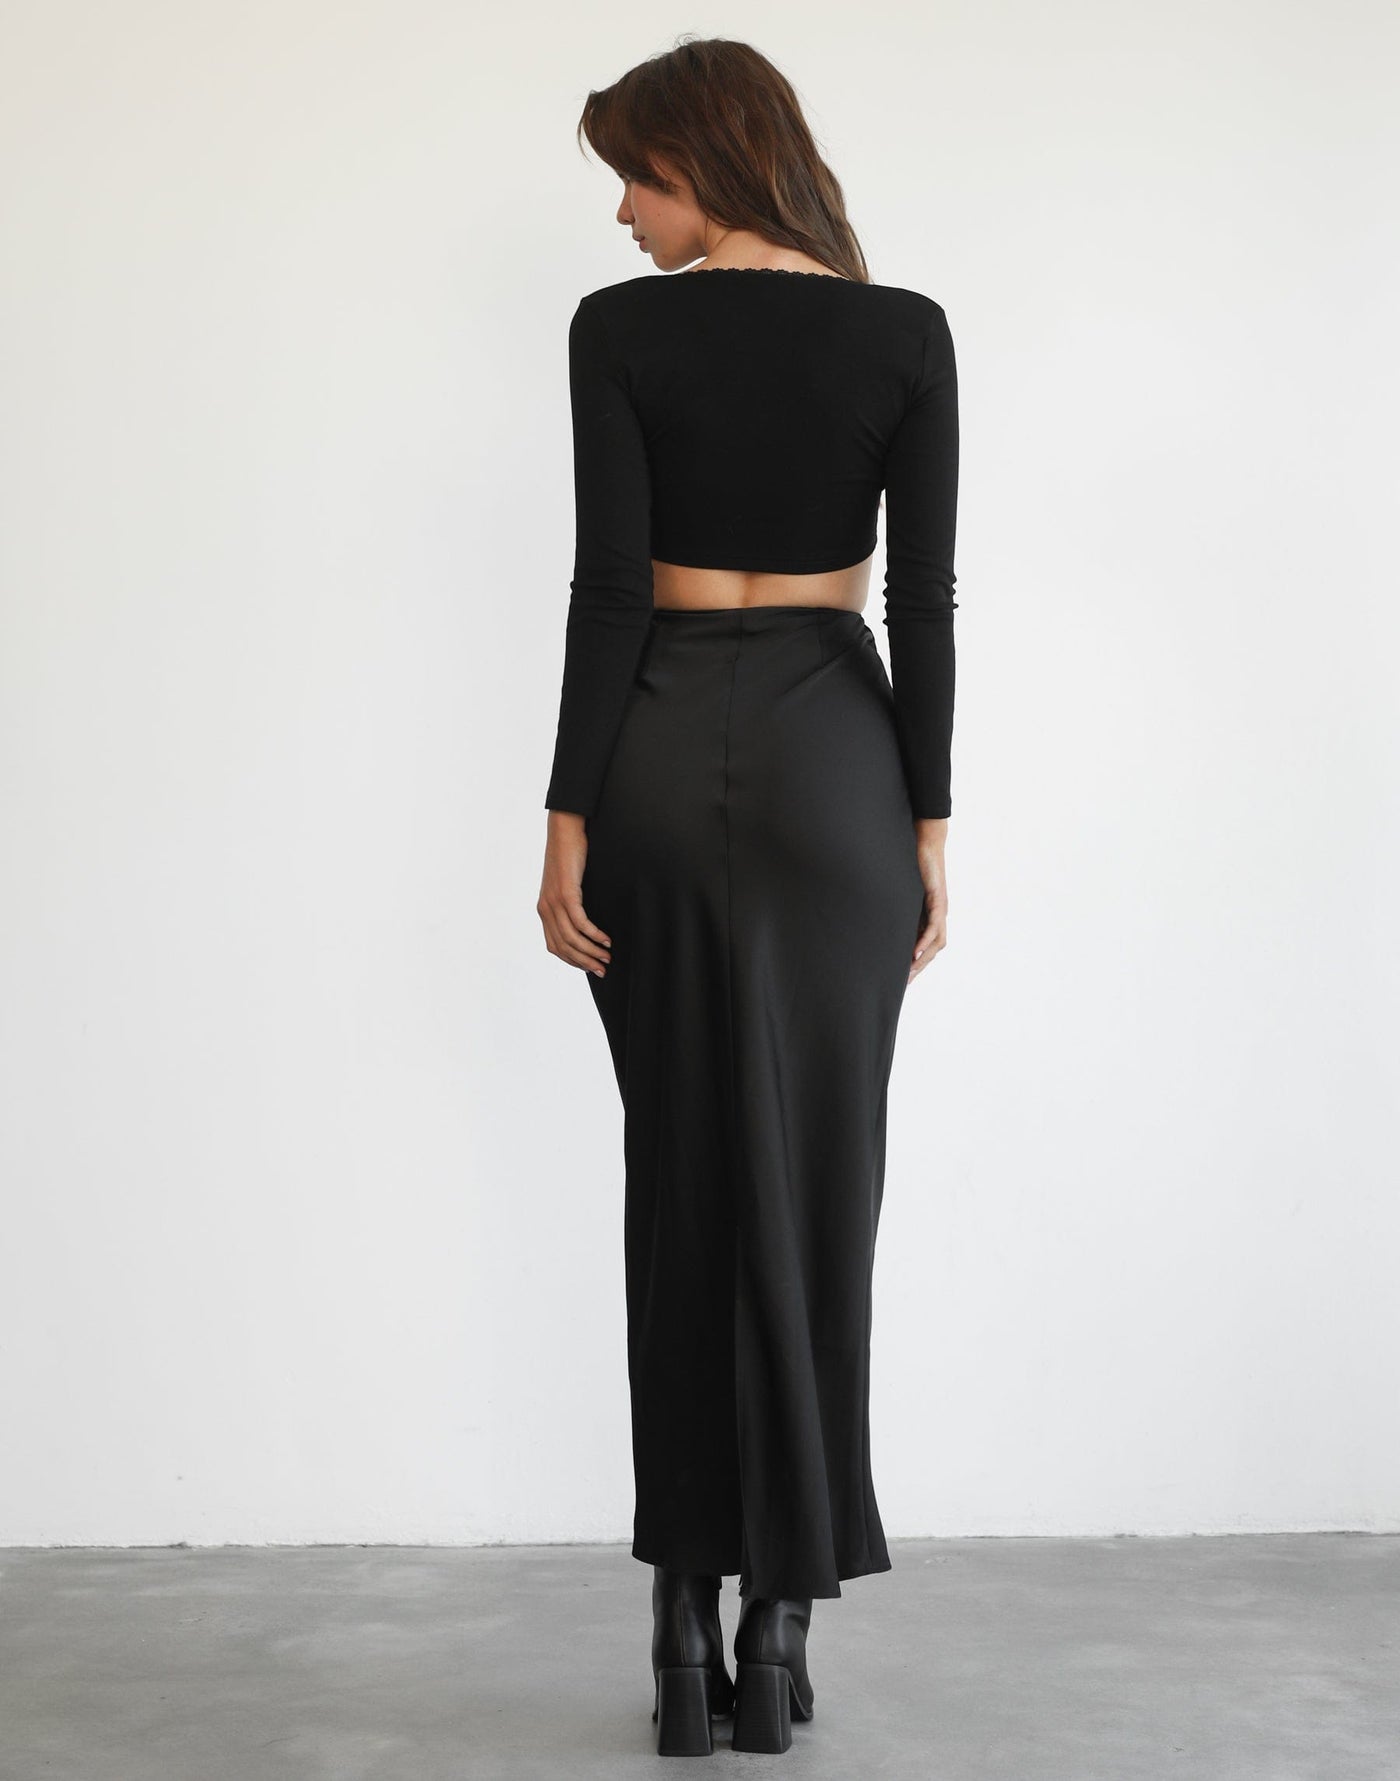 Phena Long Sleeve Top (Black) - Black Long Sleeve Crop Top - Women's Top - Charcoal Clothing